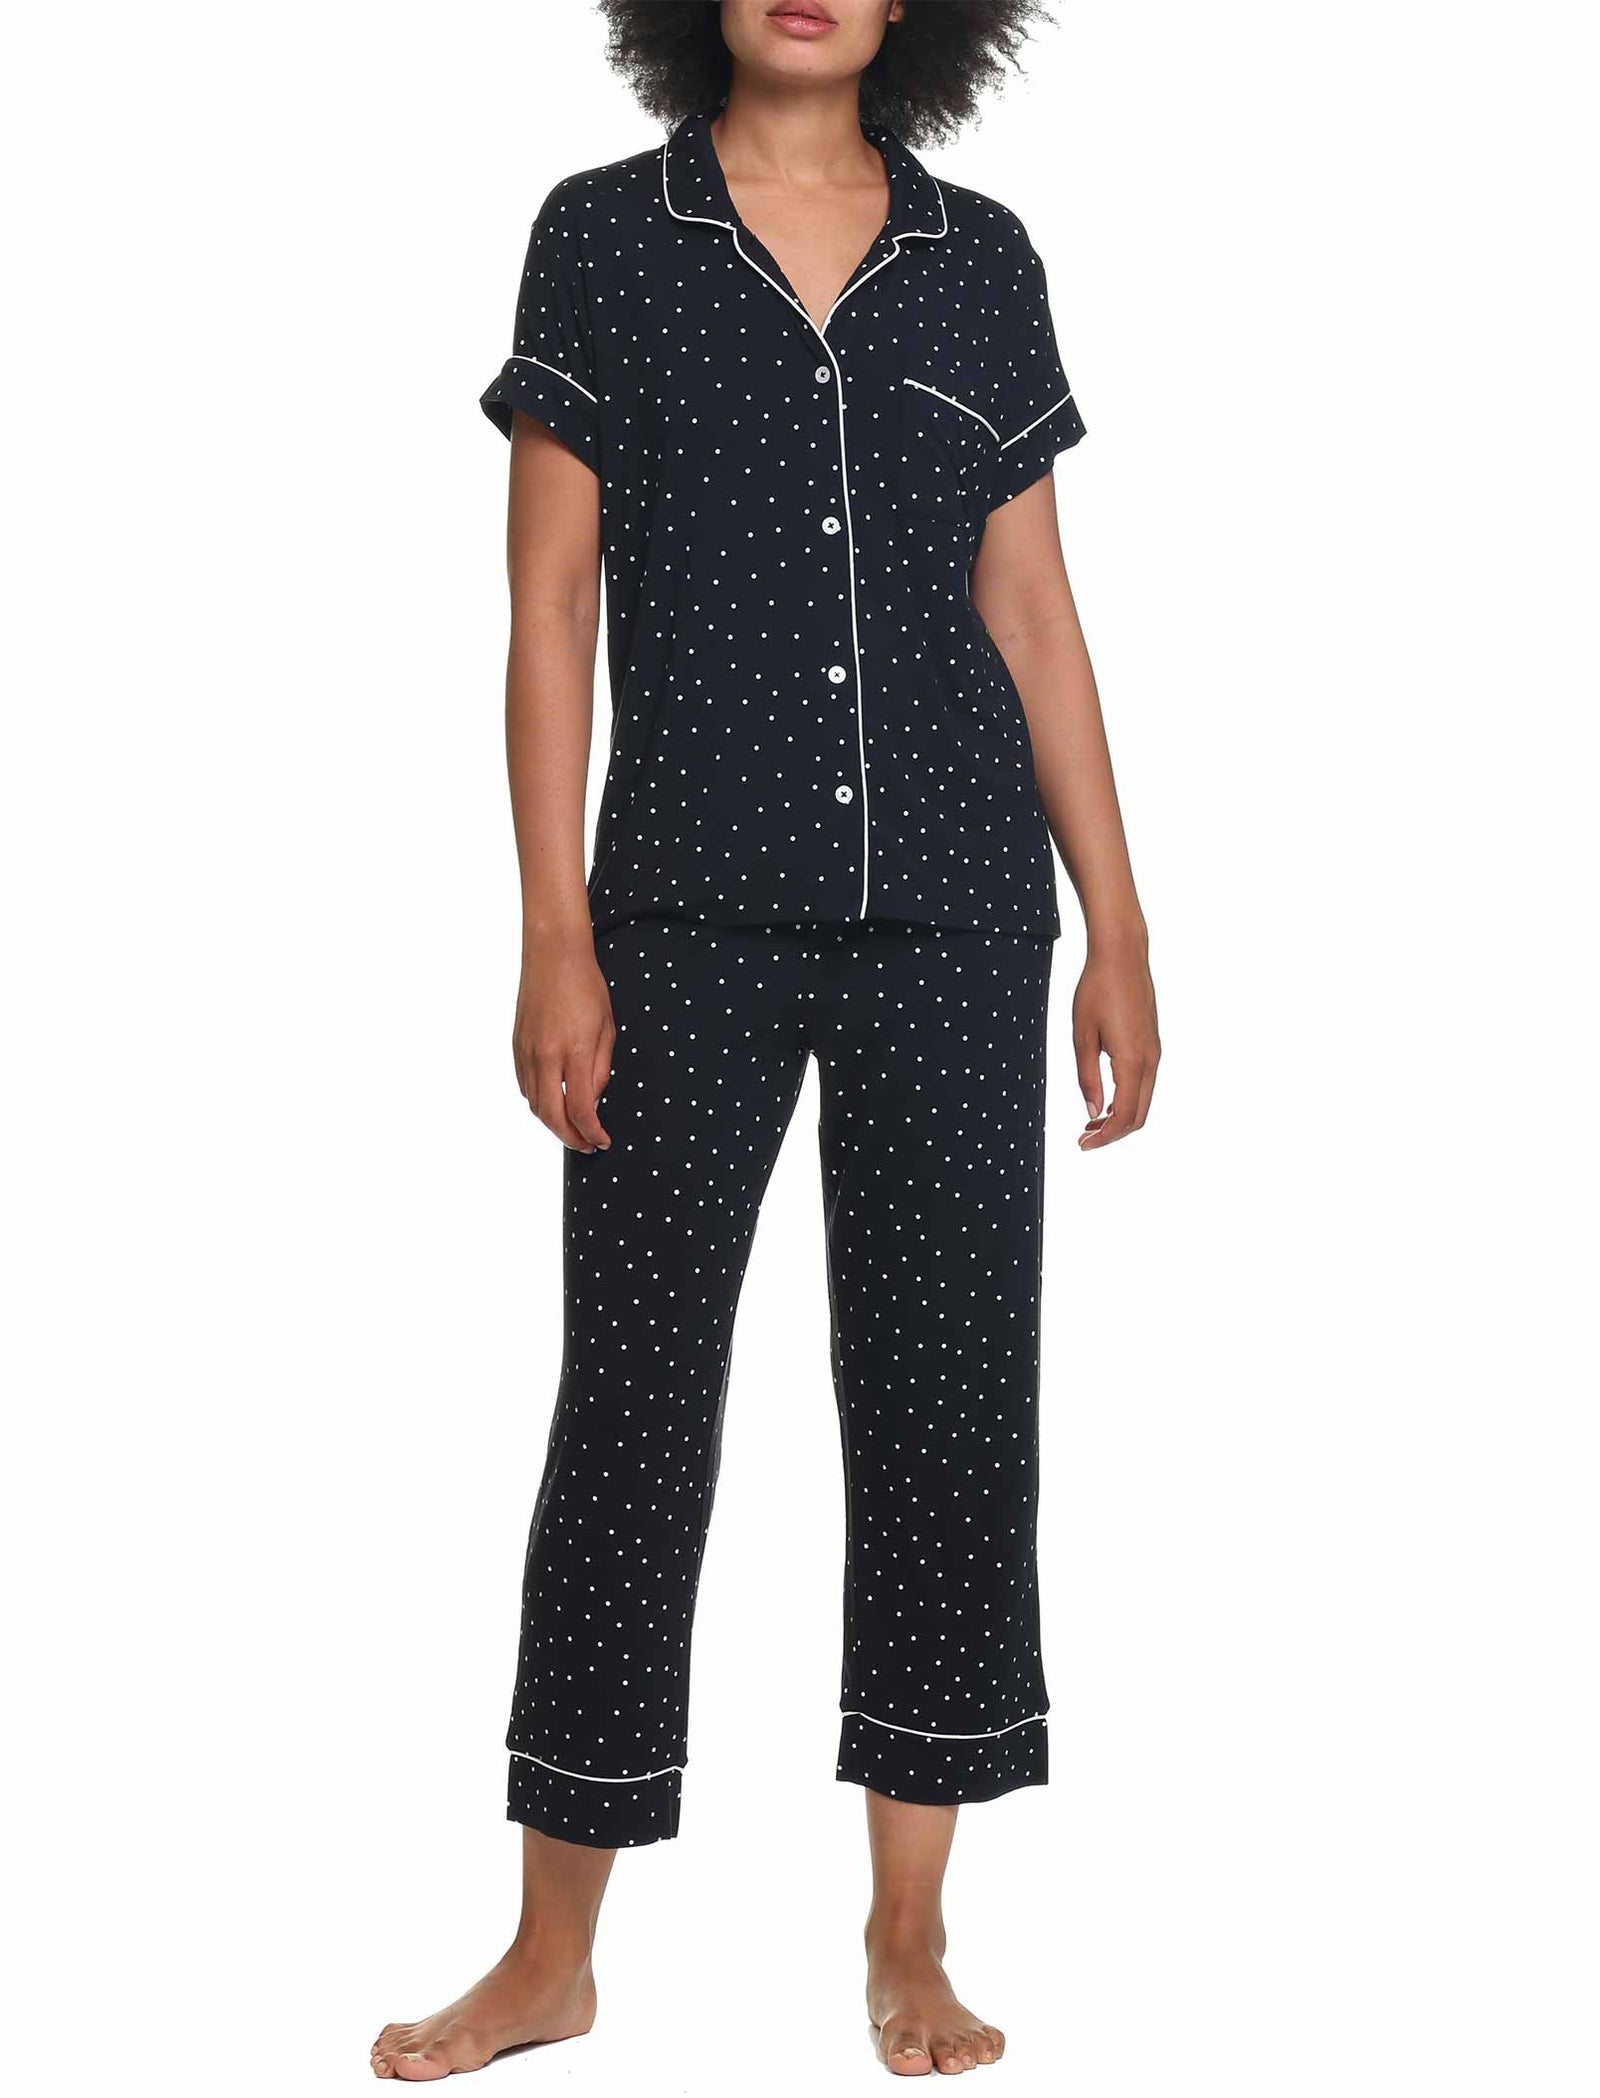 Papinelle Sleepwear | Pajama Sets from Australia